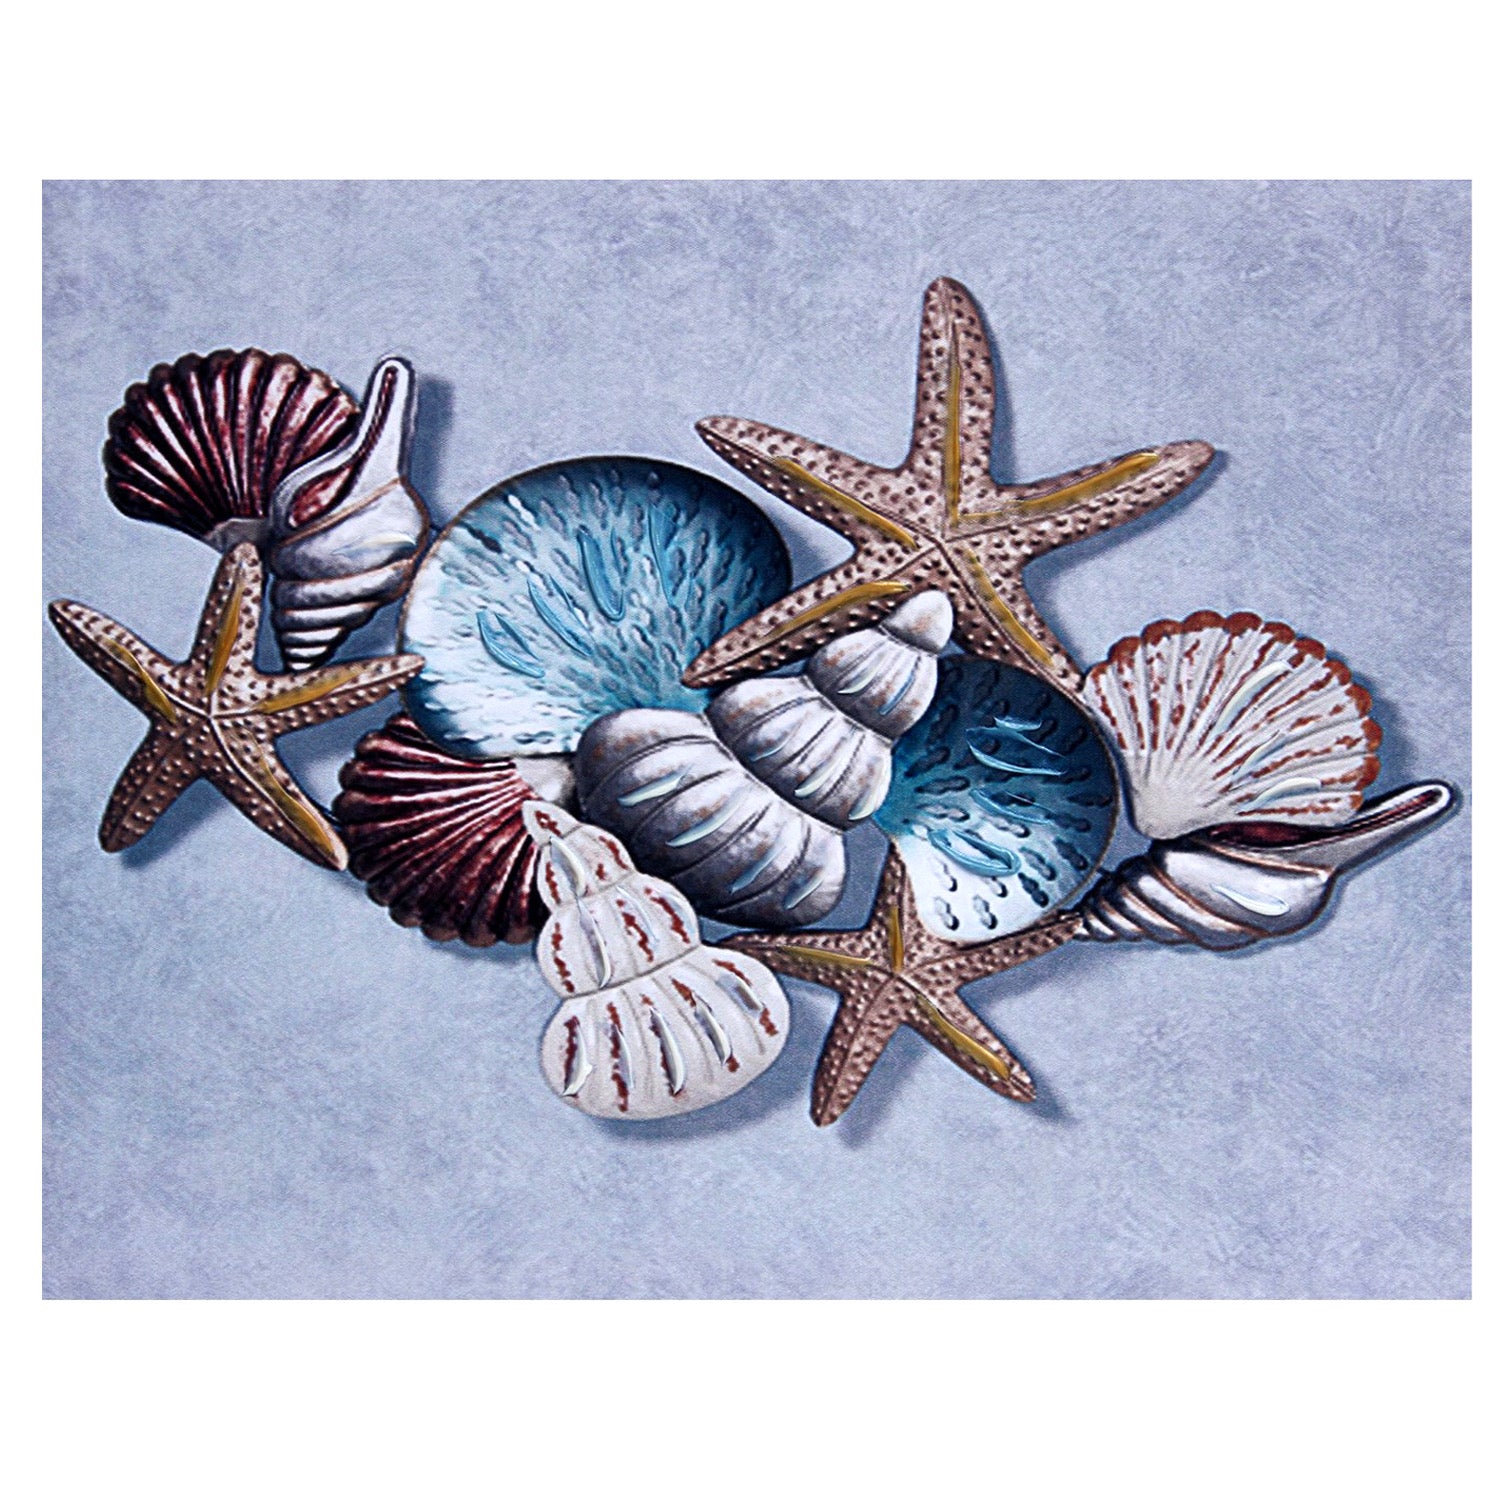 Shells Star Fish Canvas Painting - Default Title (PAINT1818)